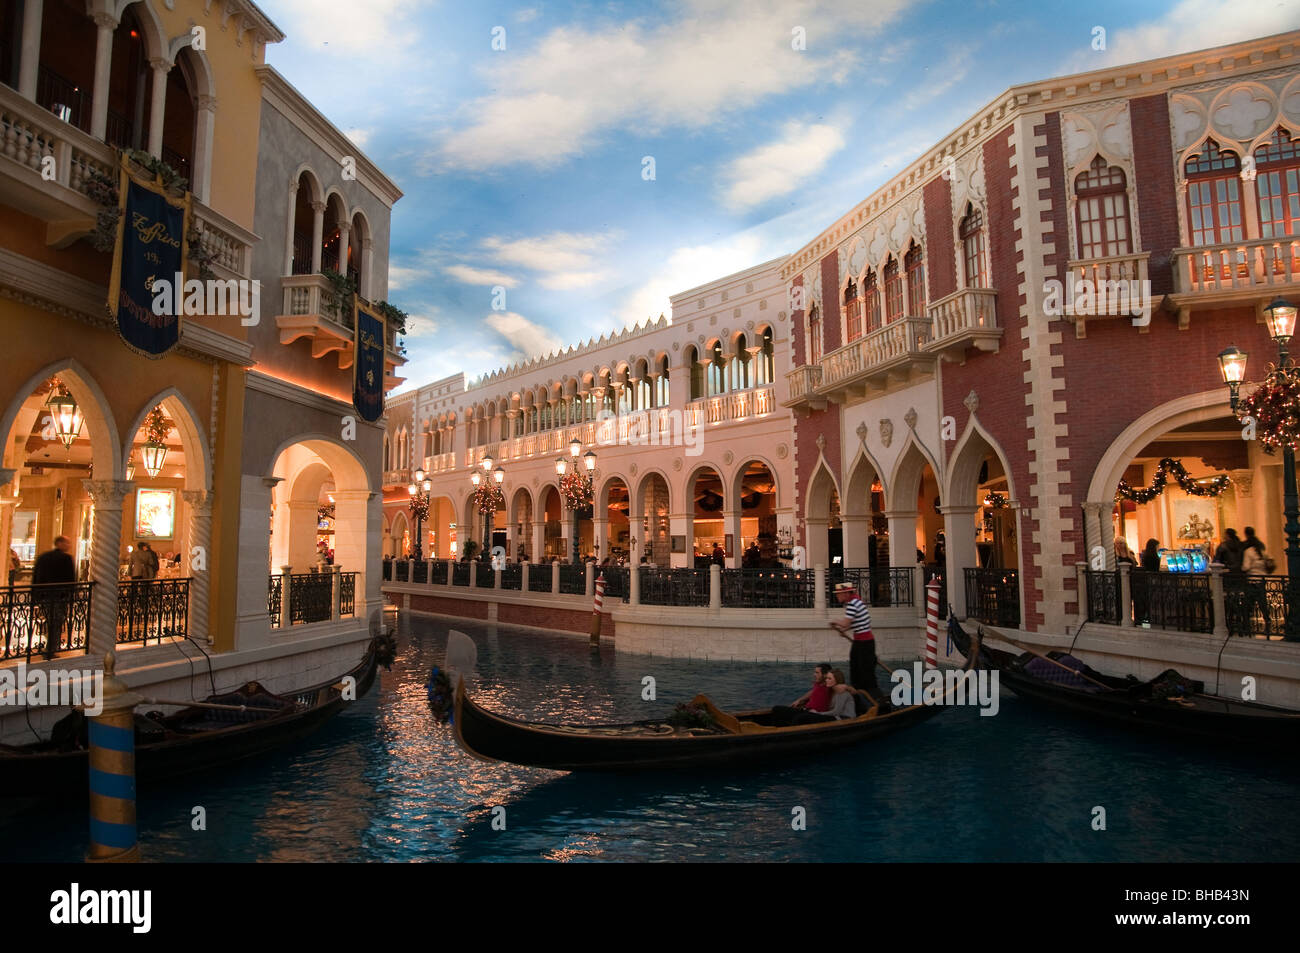 Reproduction of Italian Venice inside the Venetian Hotel and Casino, Las Vegas, Nevada, USA Stock Photo